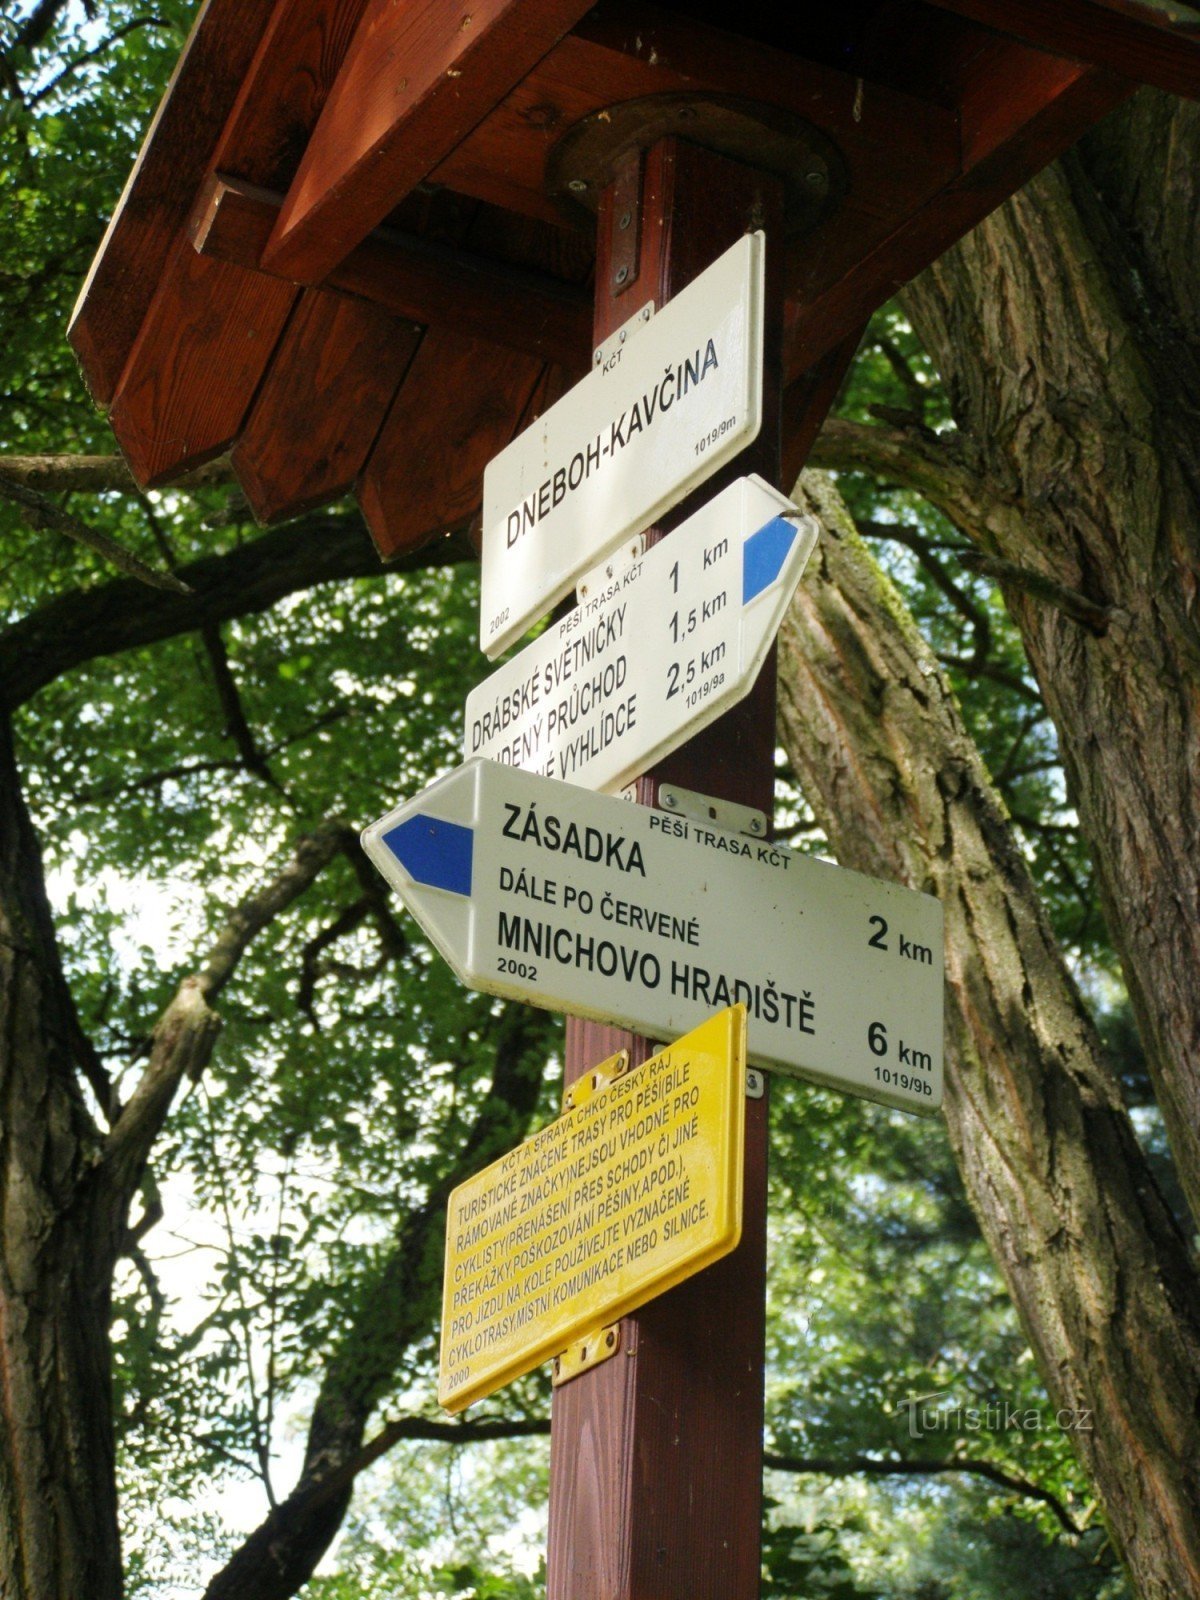 turistično križišče Dneboh - Kavčina